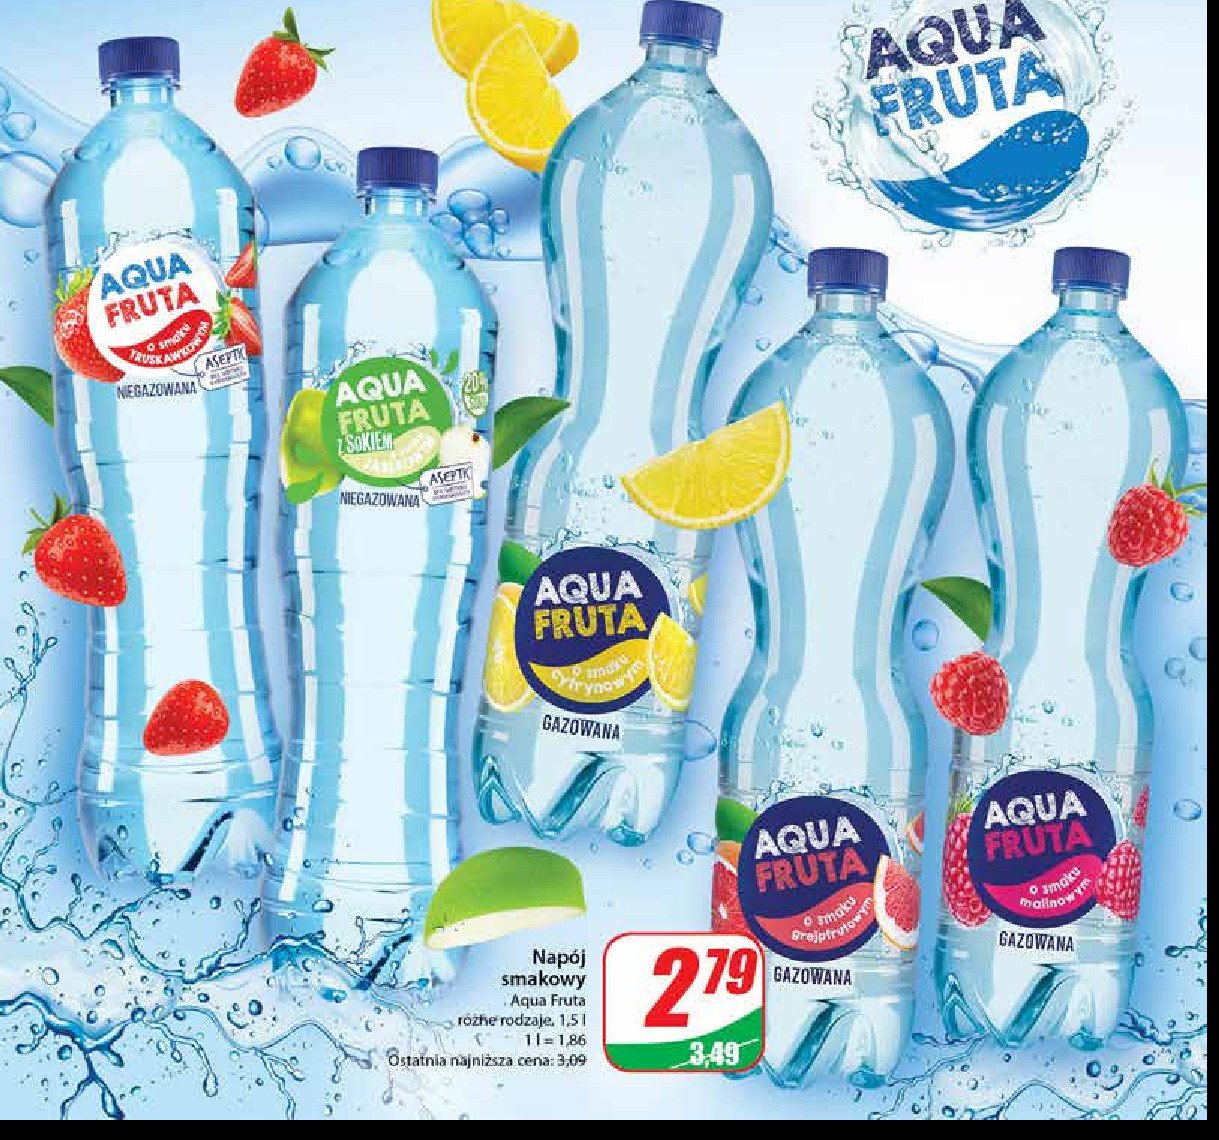 Woda grejpfrutowa Aqua fruta promocja